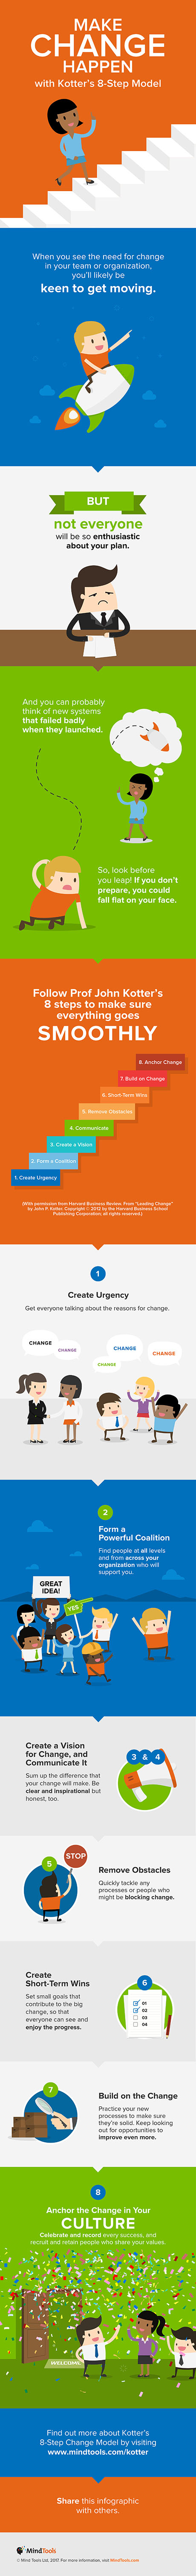 Kotter's 8-Step Change Model Infographic